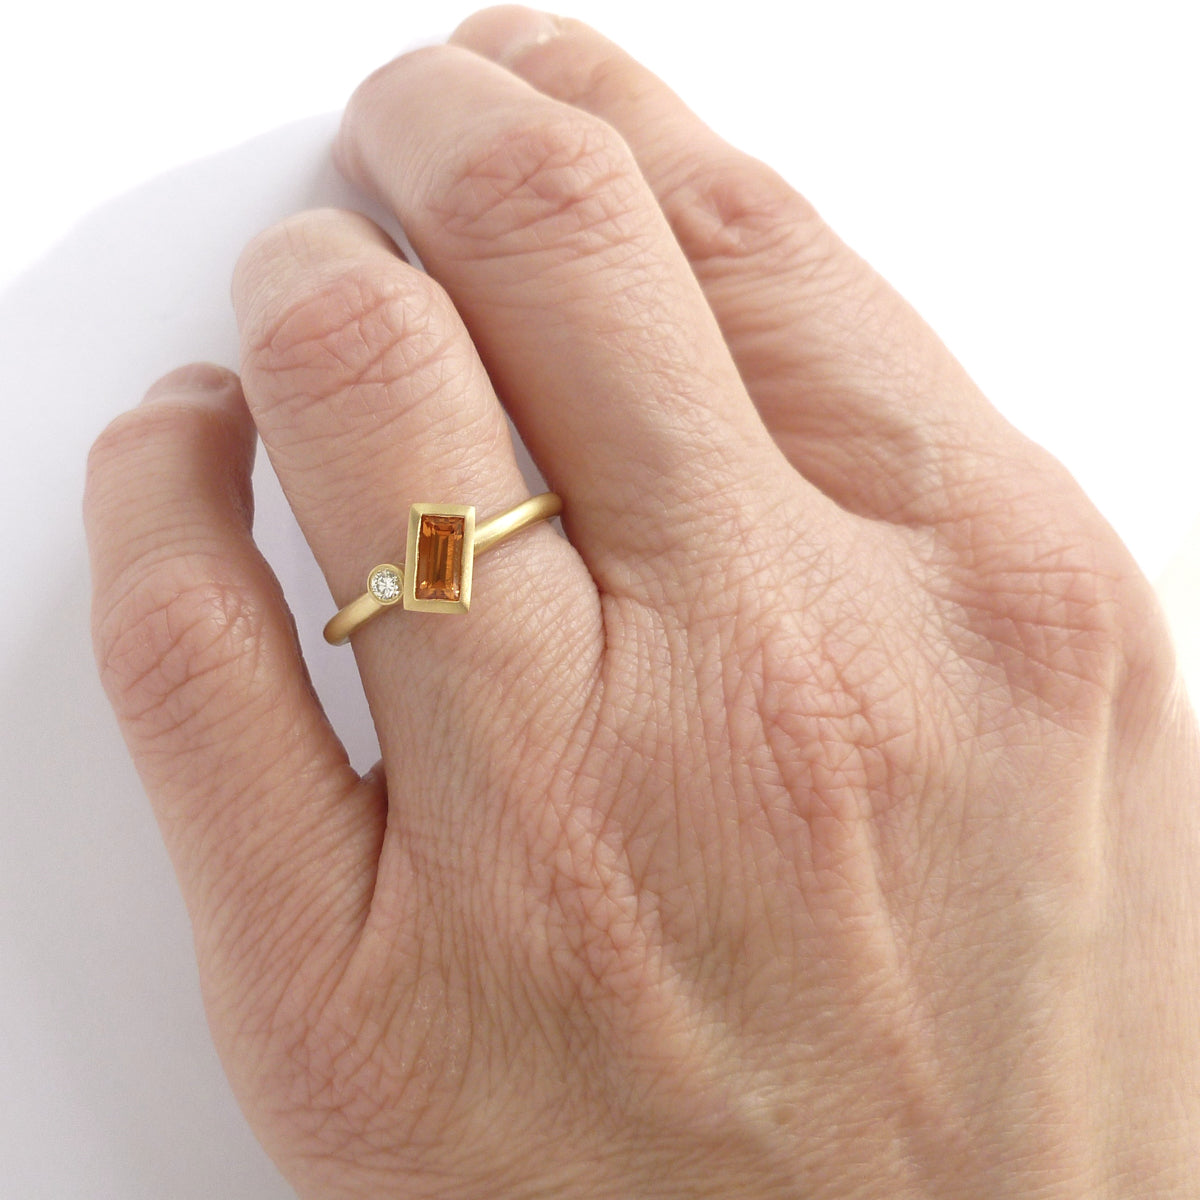 Contemporary jewellery, handmade, modern, bespoke gold and orange sapphire ring by Sue Lane